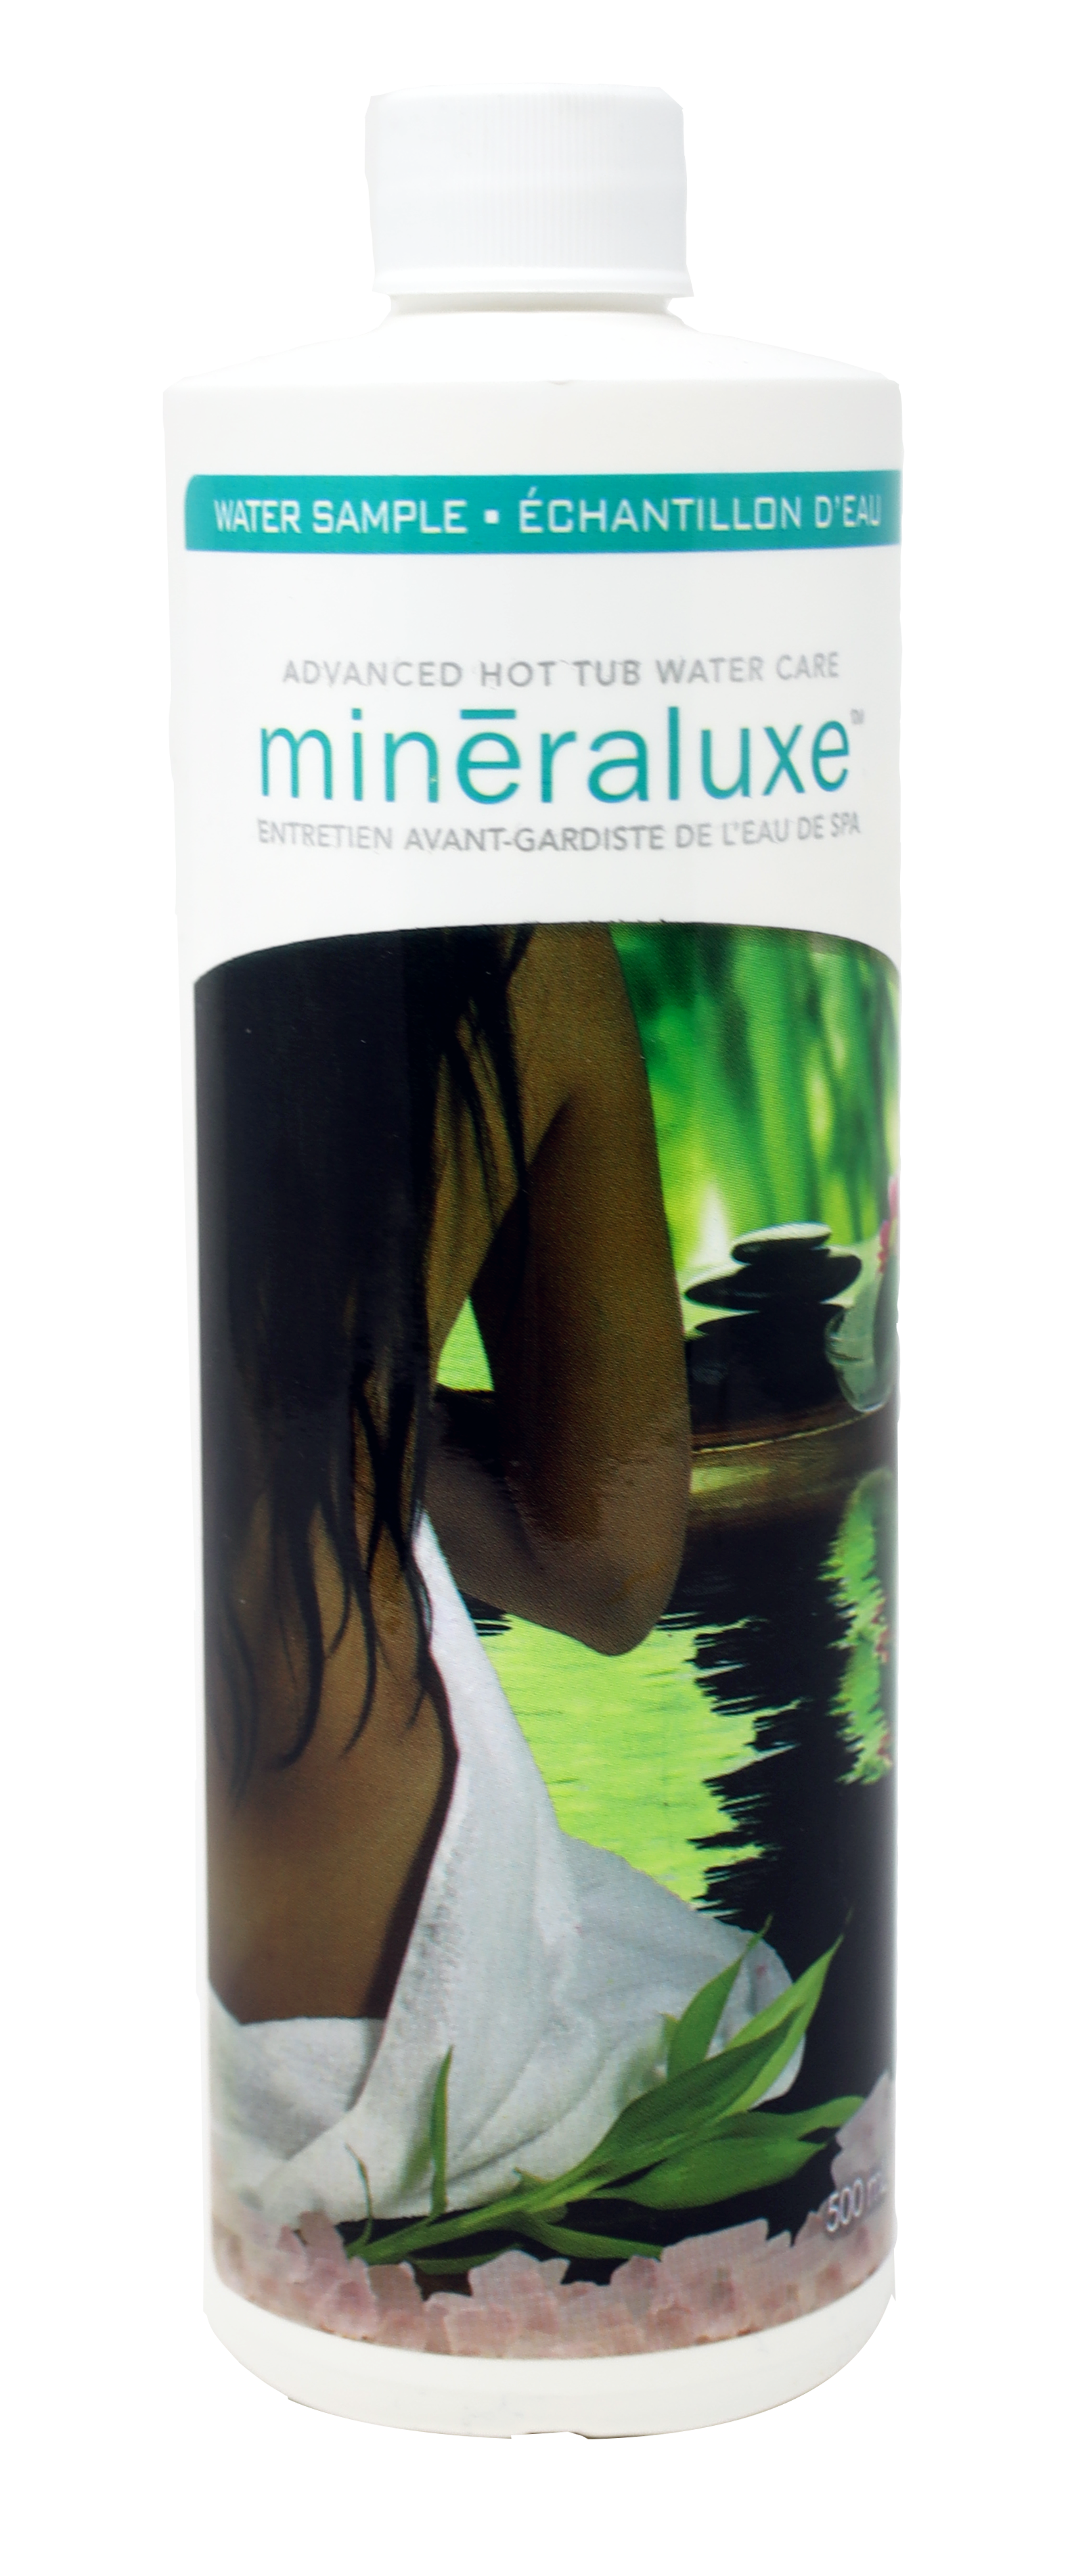 Mineraluxe Water Sample 1 X 1 Pint